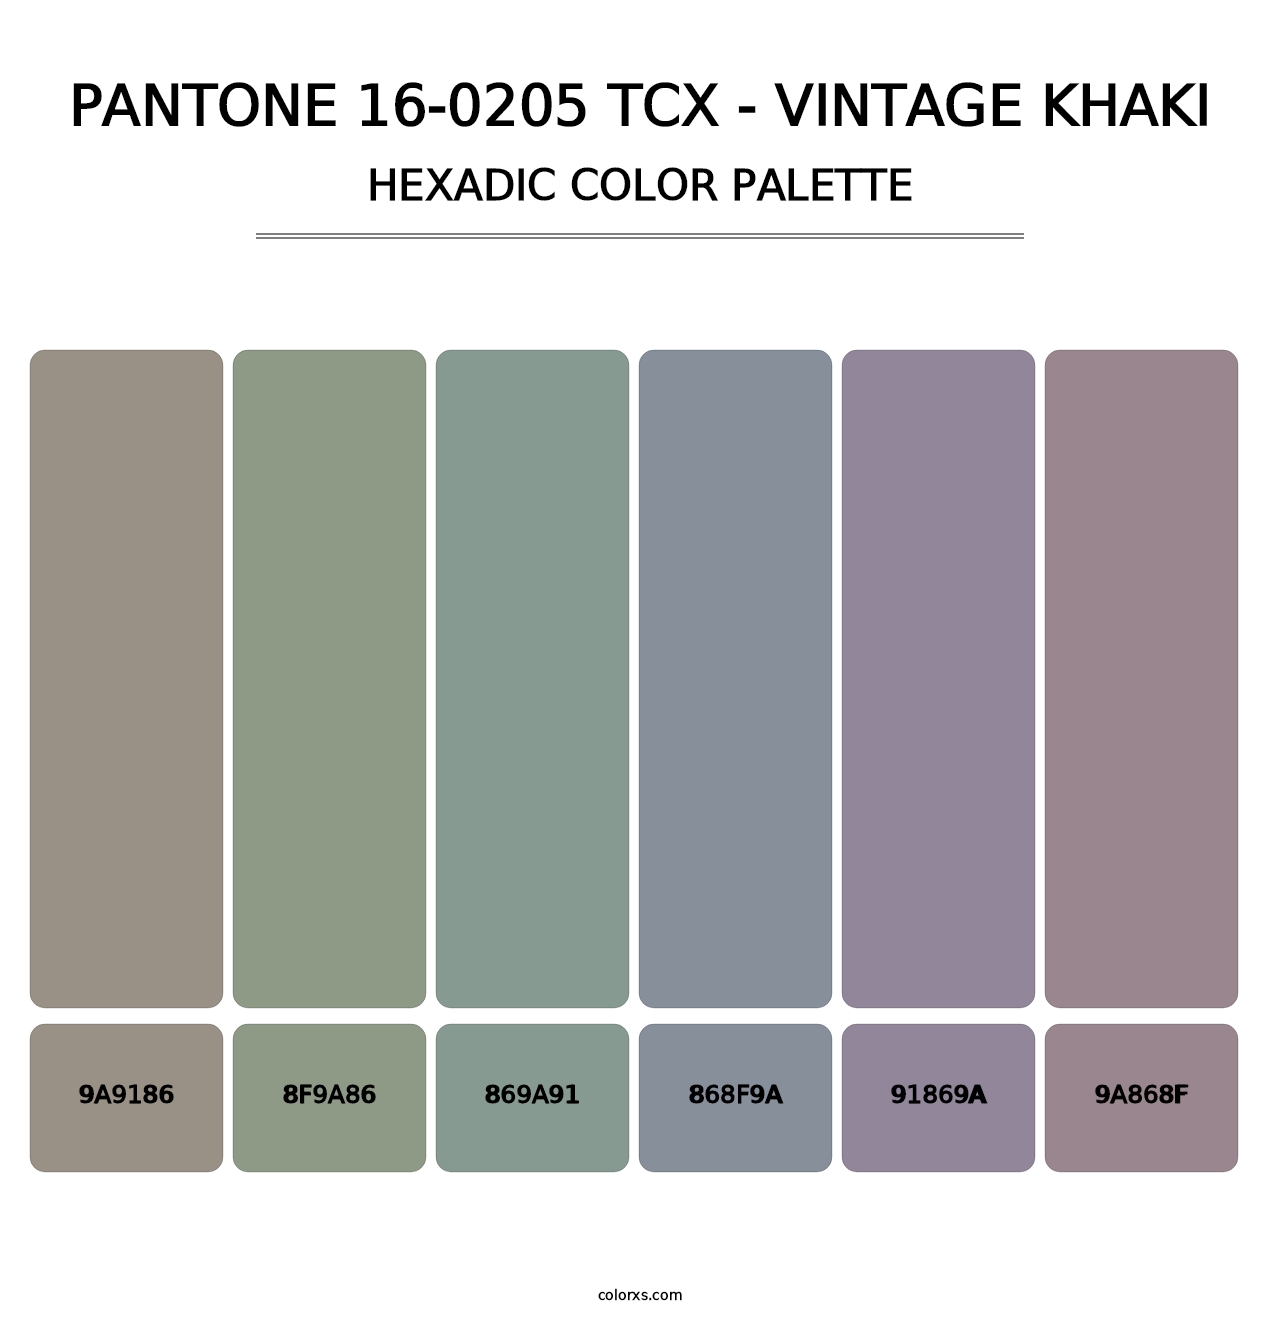 PANTONE 16-0205 TCX - Vintage Khaki - Hexadic Color Palette